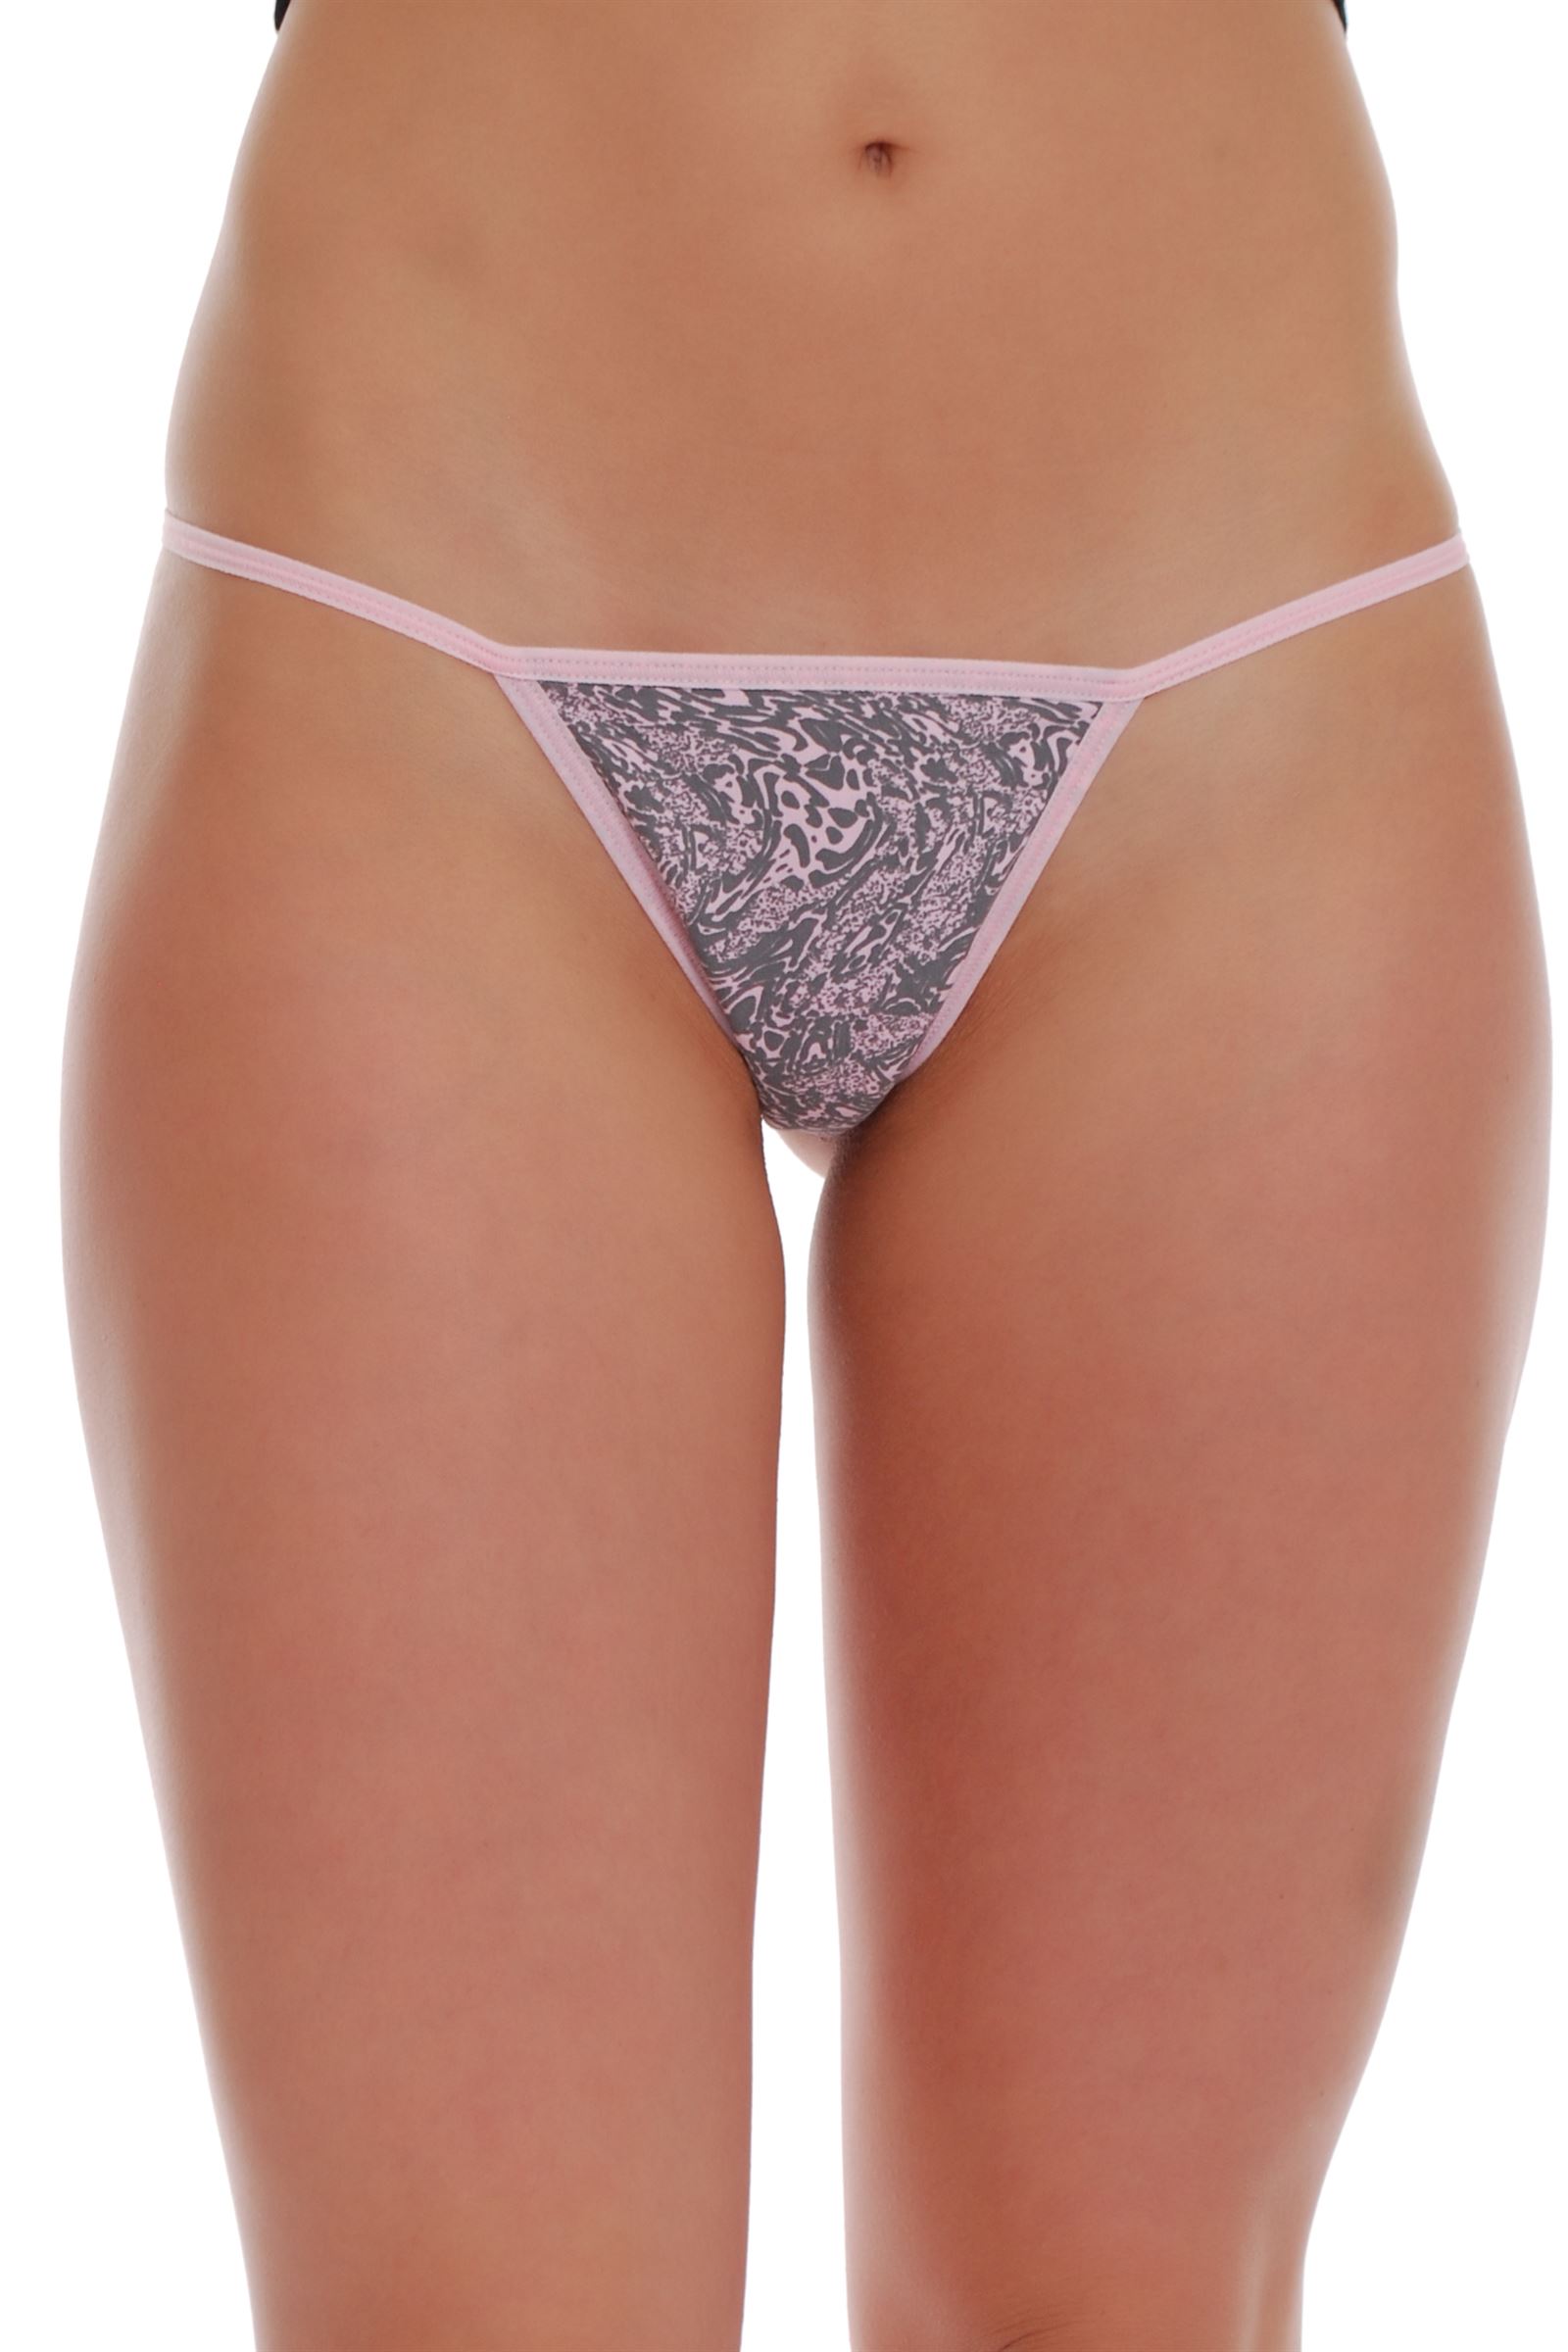 Tiara Galiano Pack Cotton G String Style Panties T Back Uk Knickers Ebay